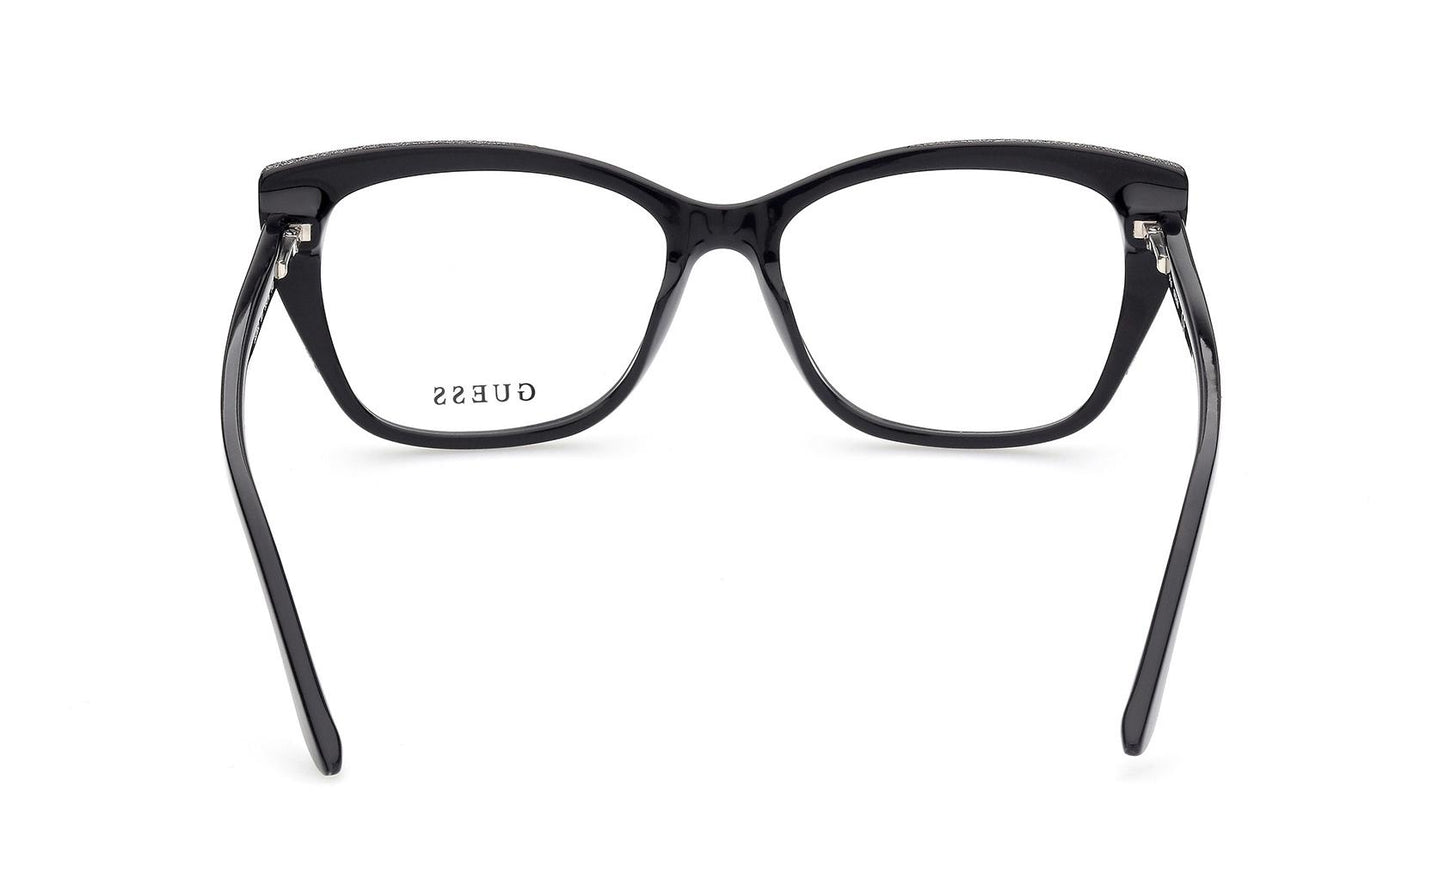 Guess Eyeglasses GU2852 001